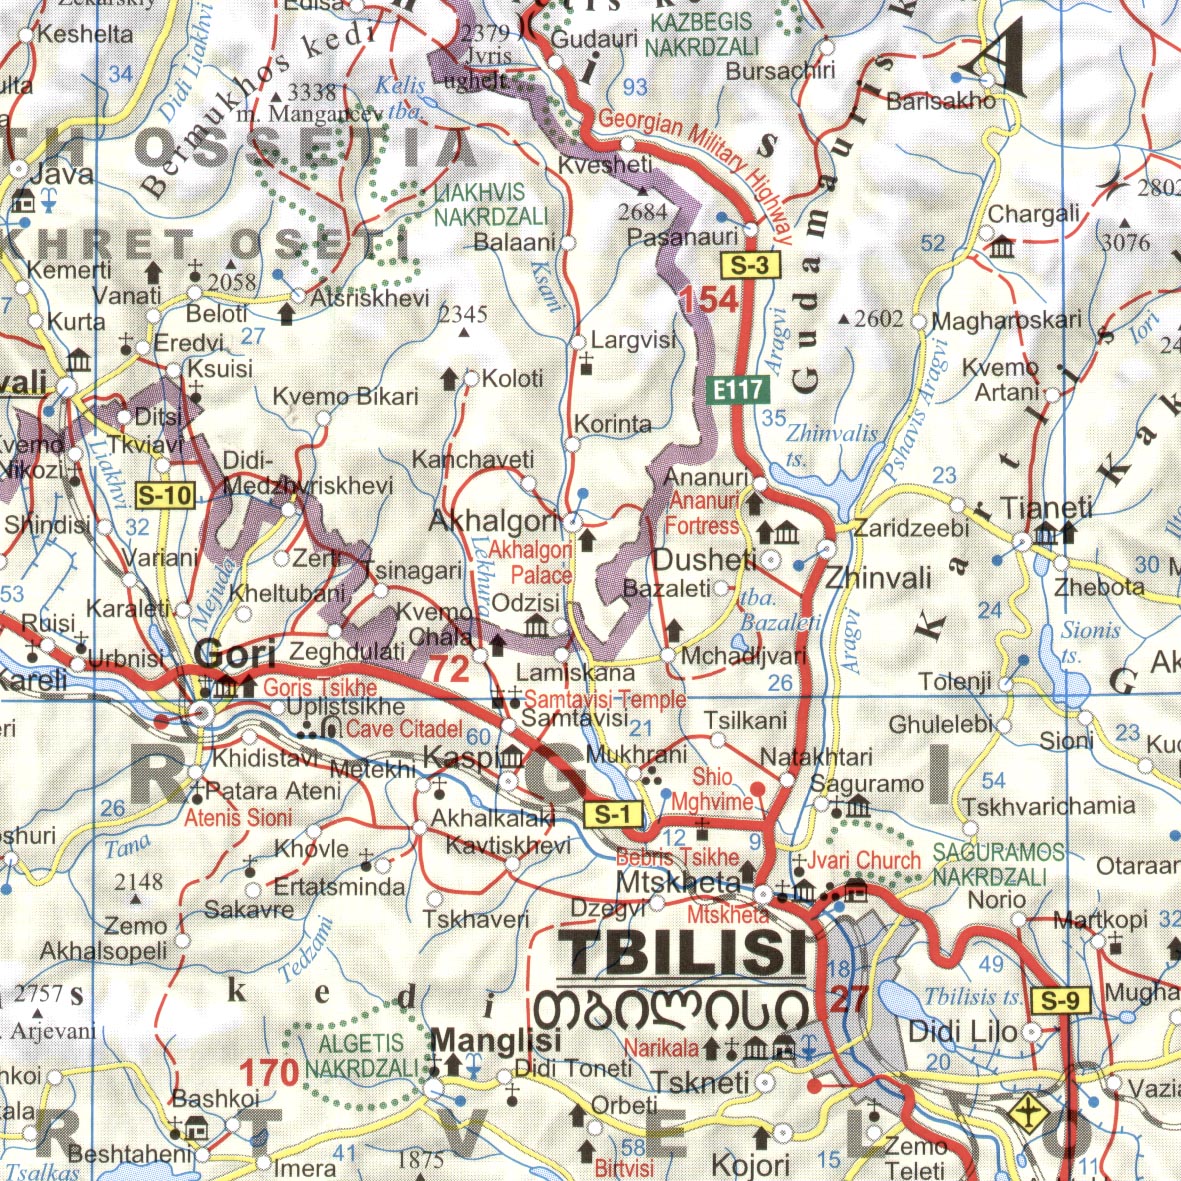 Kaukasus Road Map 1:1 Mio.